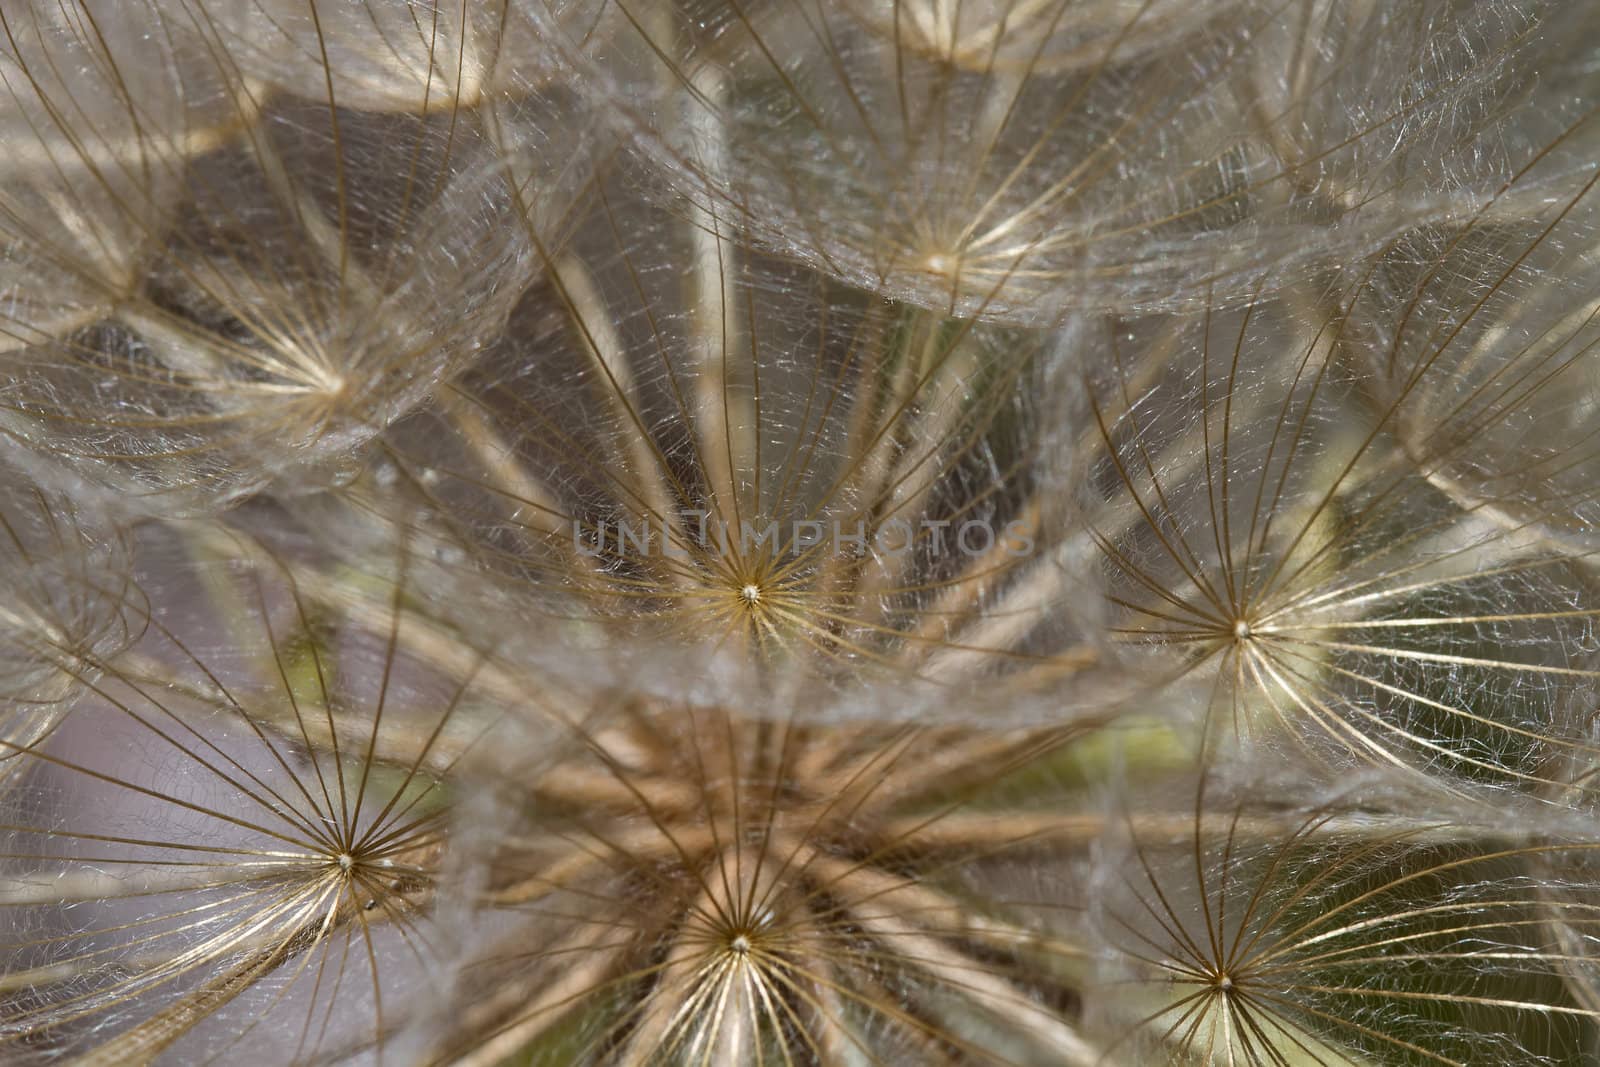 Dandelion Flower Seed Head Macro Closeup by Davidgn